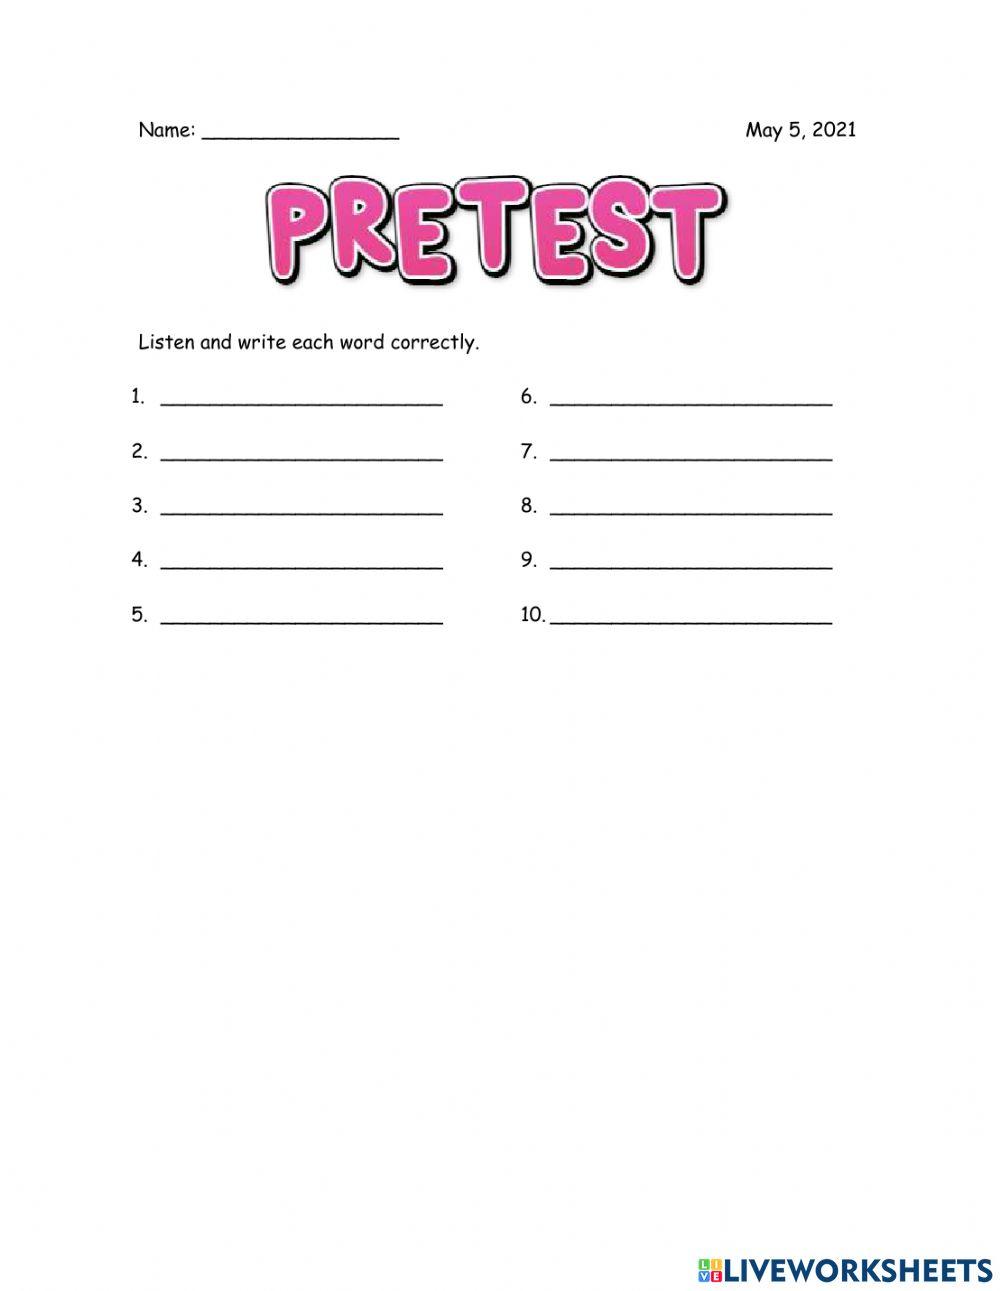 Pretest 3rd 05-05